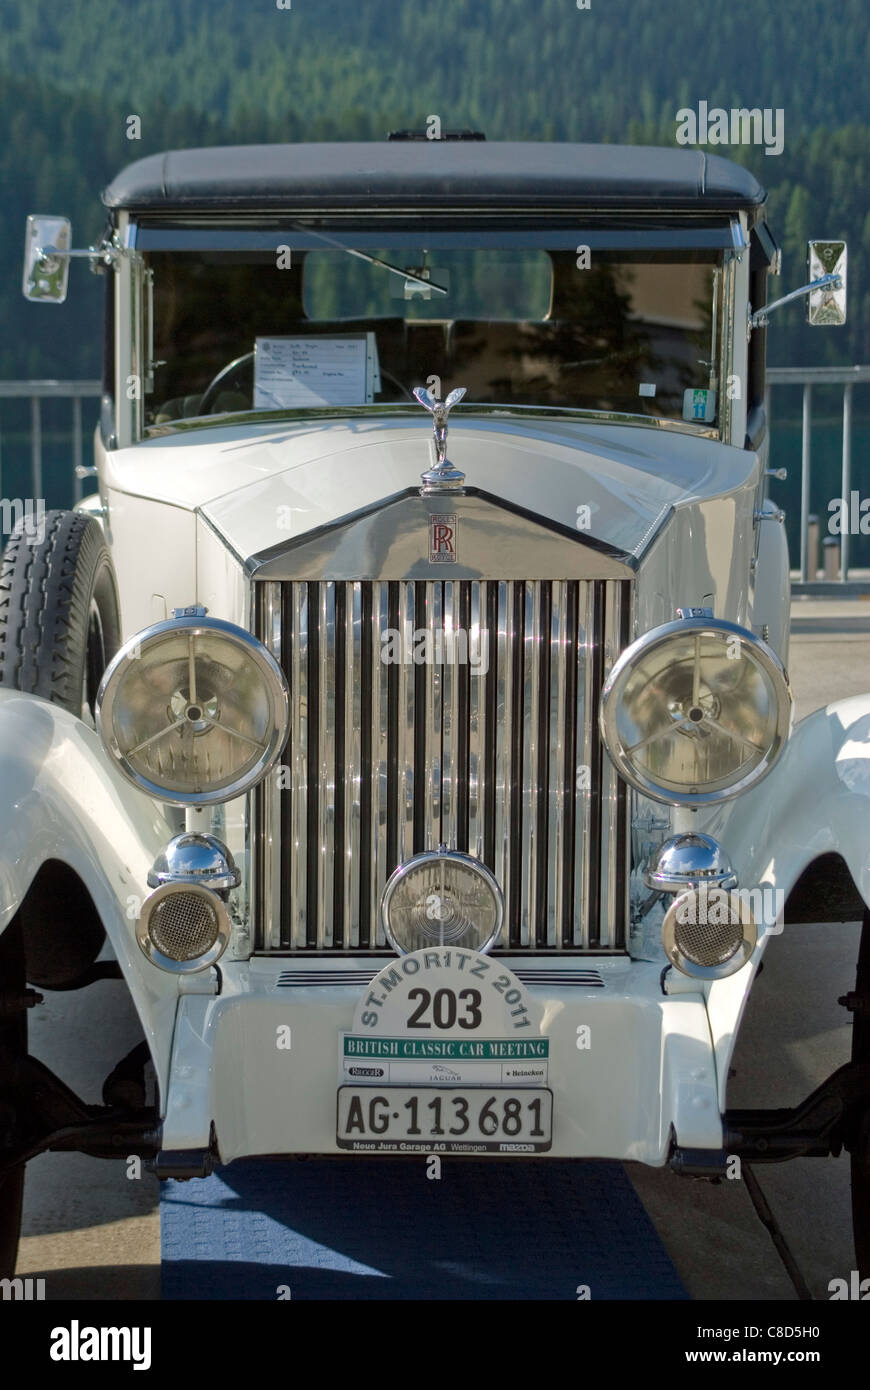 Rolls Royce Phantom Vintage Car Closeup während der British Classic Car  Meeting St.Moritz, Schweiz Stockfotografie - Alamy